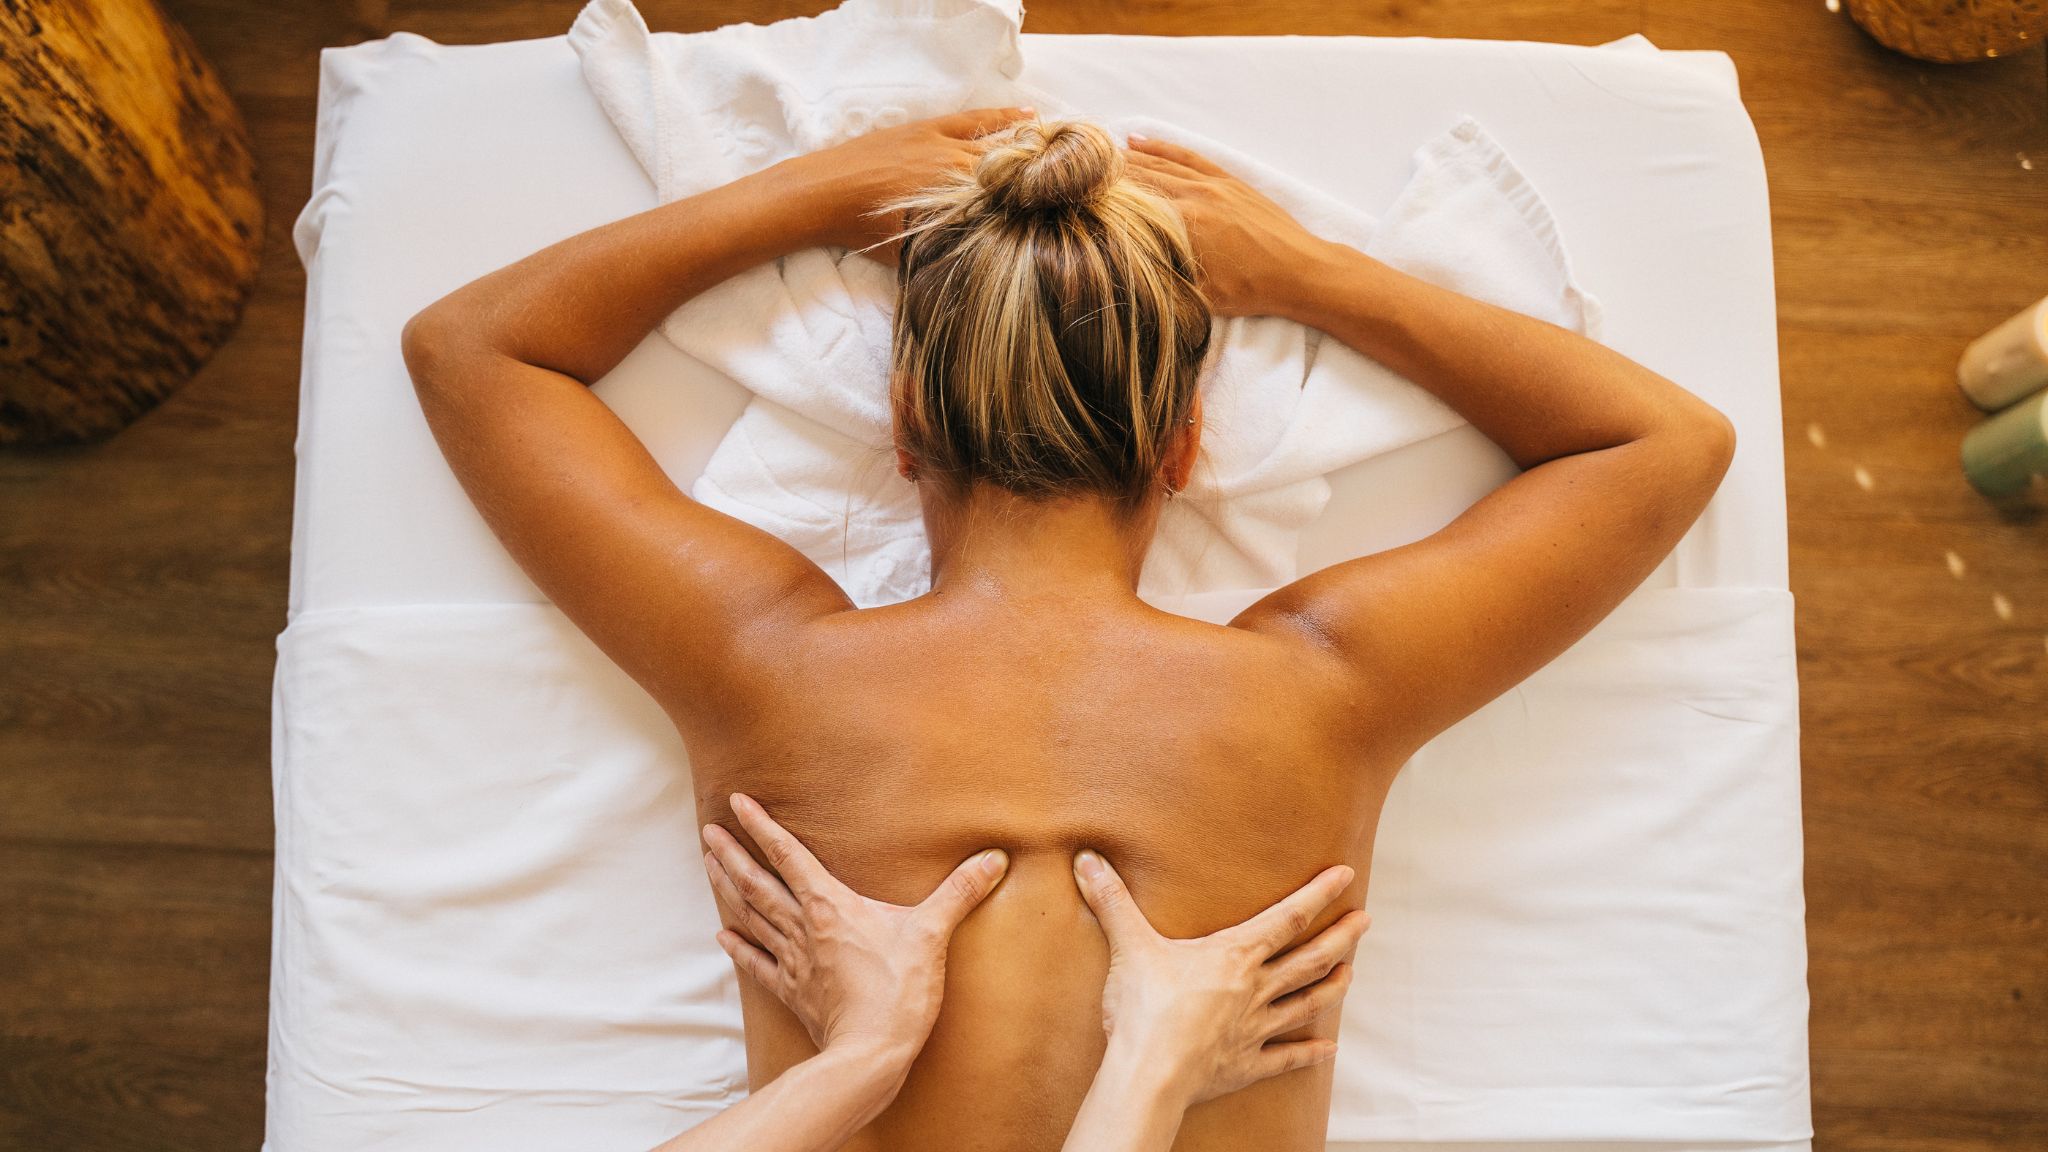 Blonde woman getting a back massage